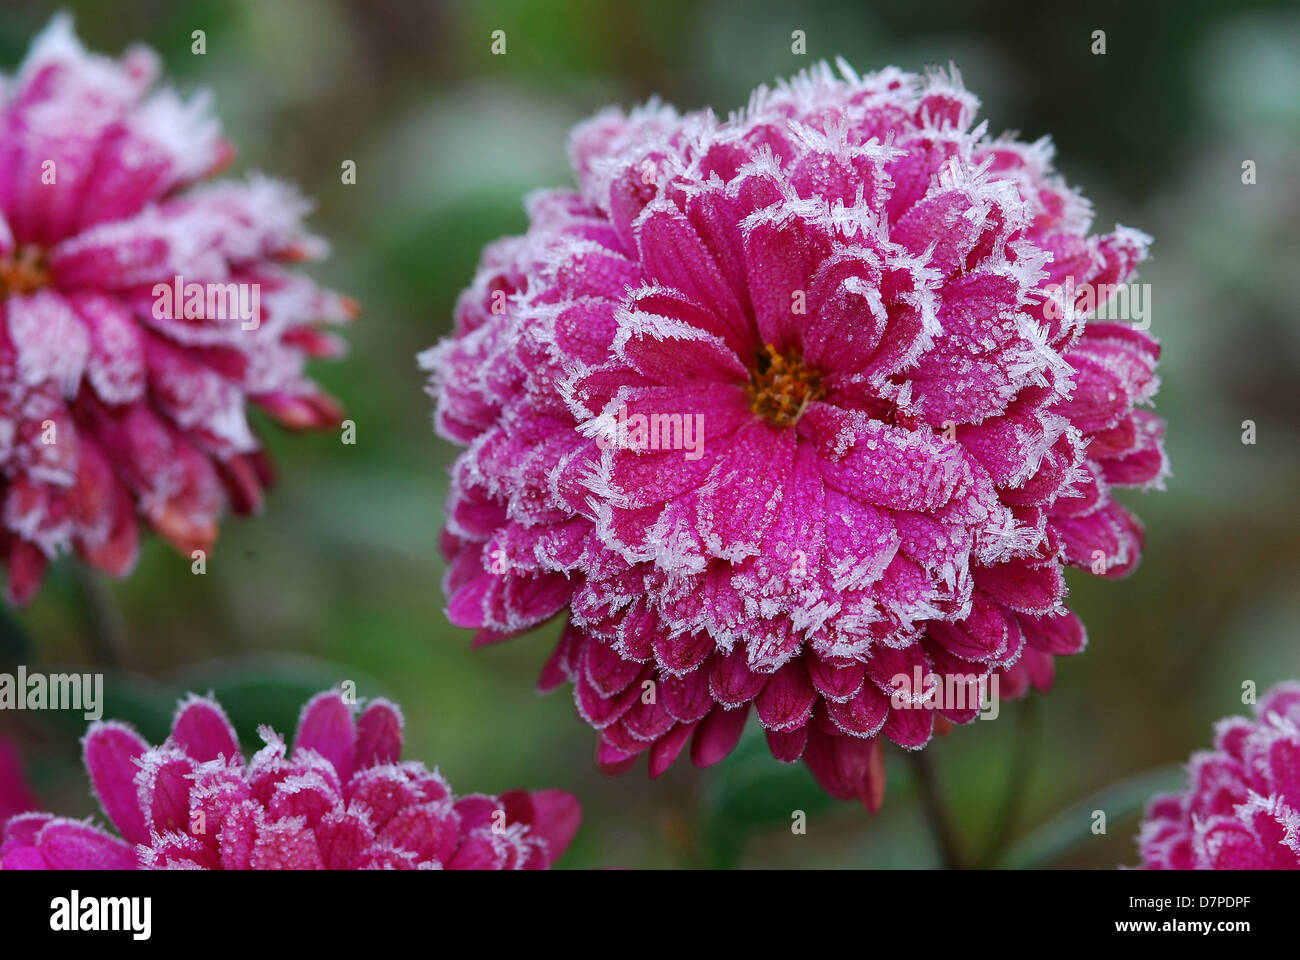 Aster, garden chrysanthemum blossoms covered with hoarfrost Aster, Garten Chrysantheme mit raureifbedeckter Bluete Stock Photo